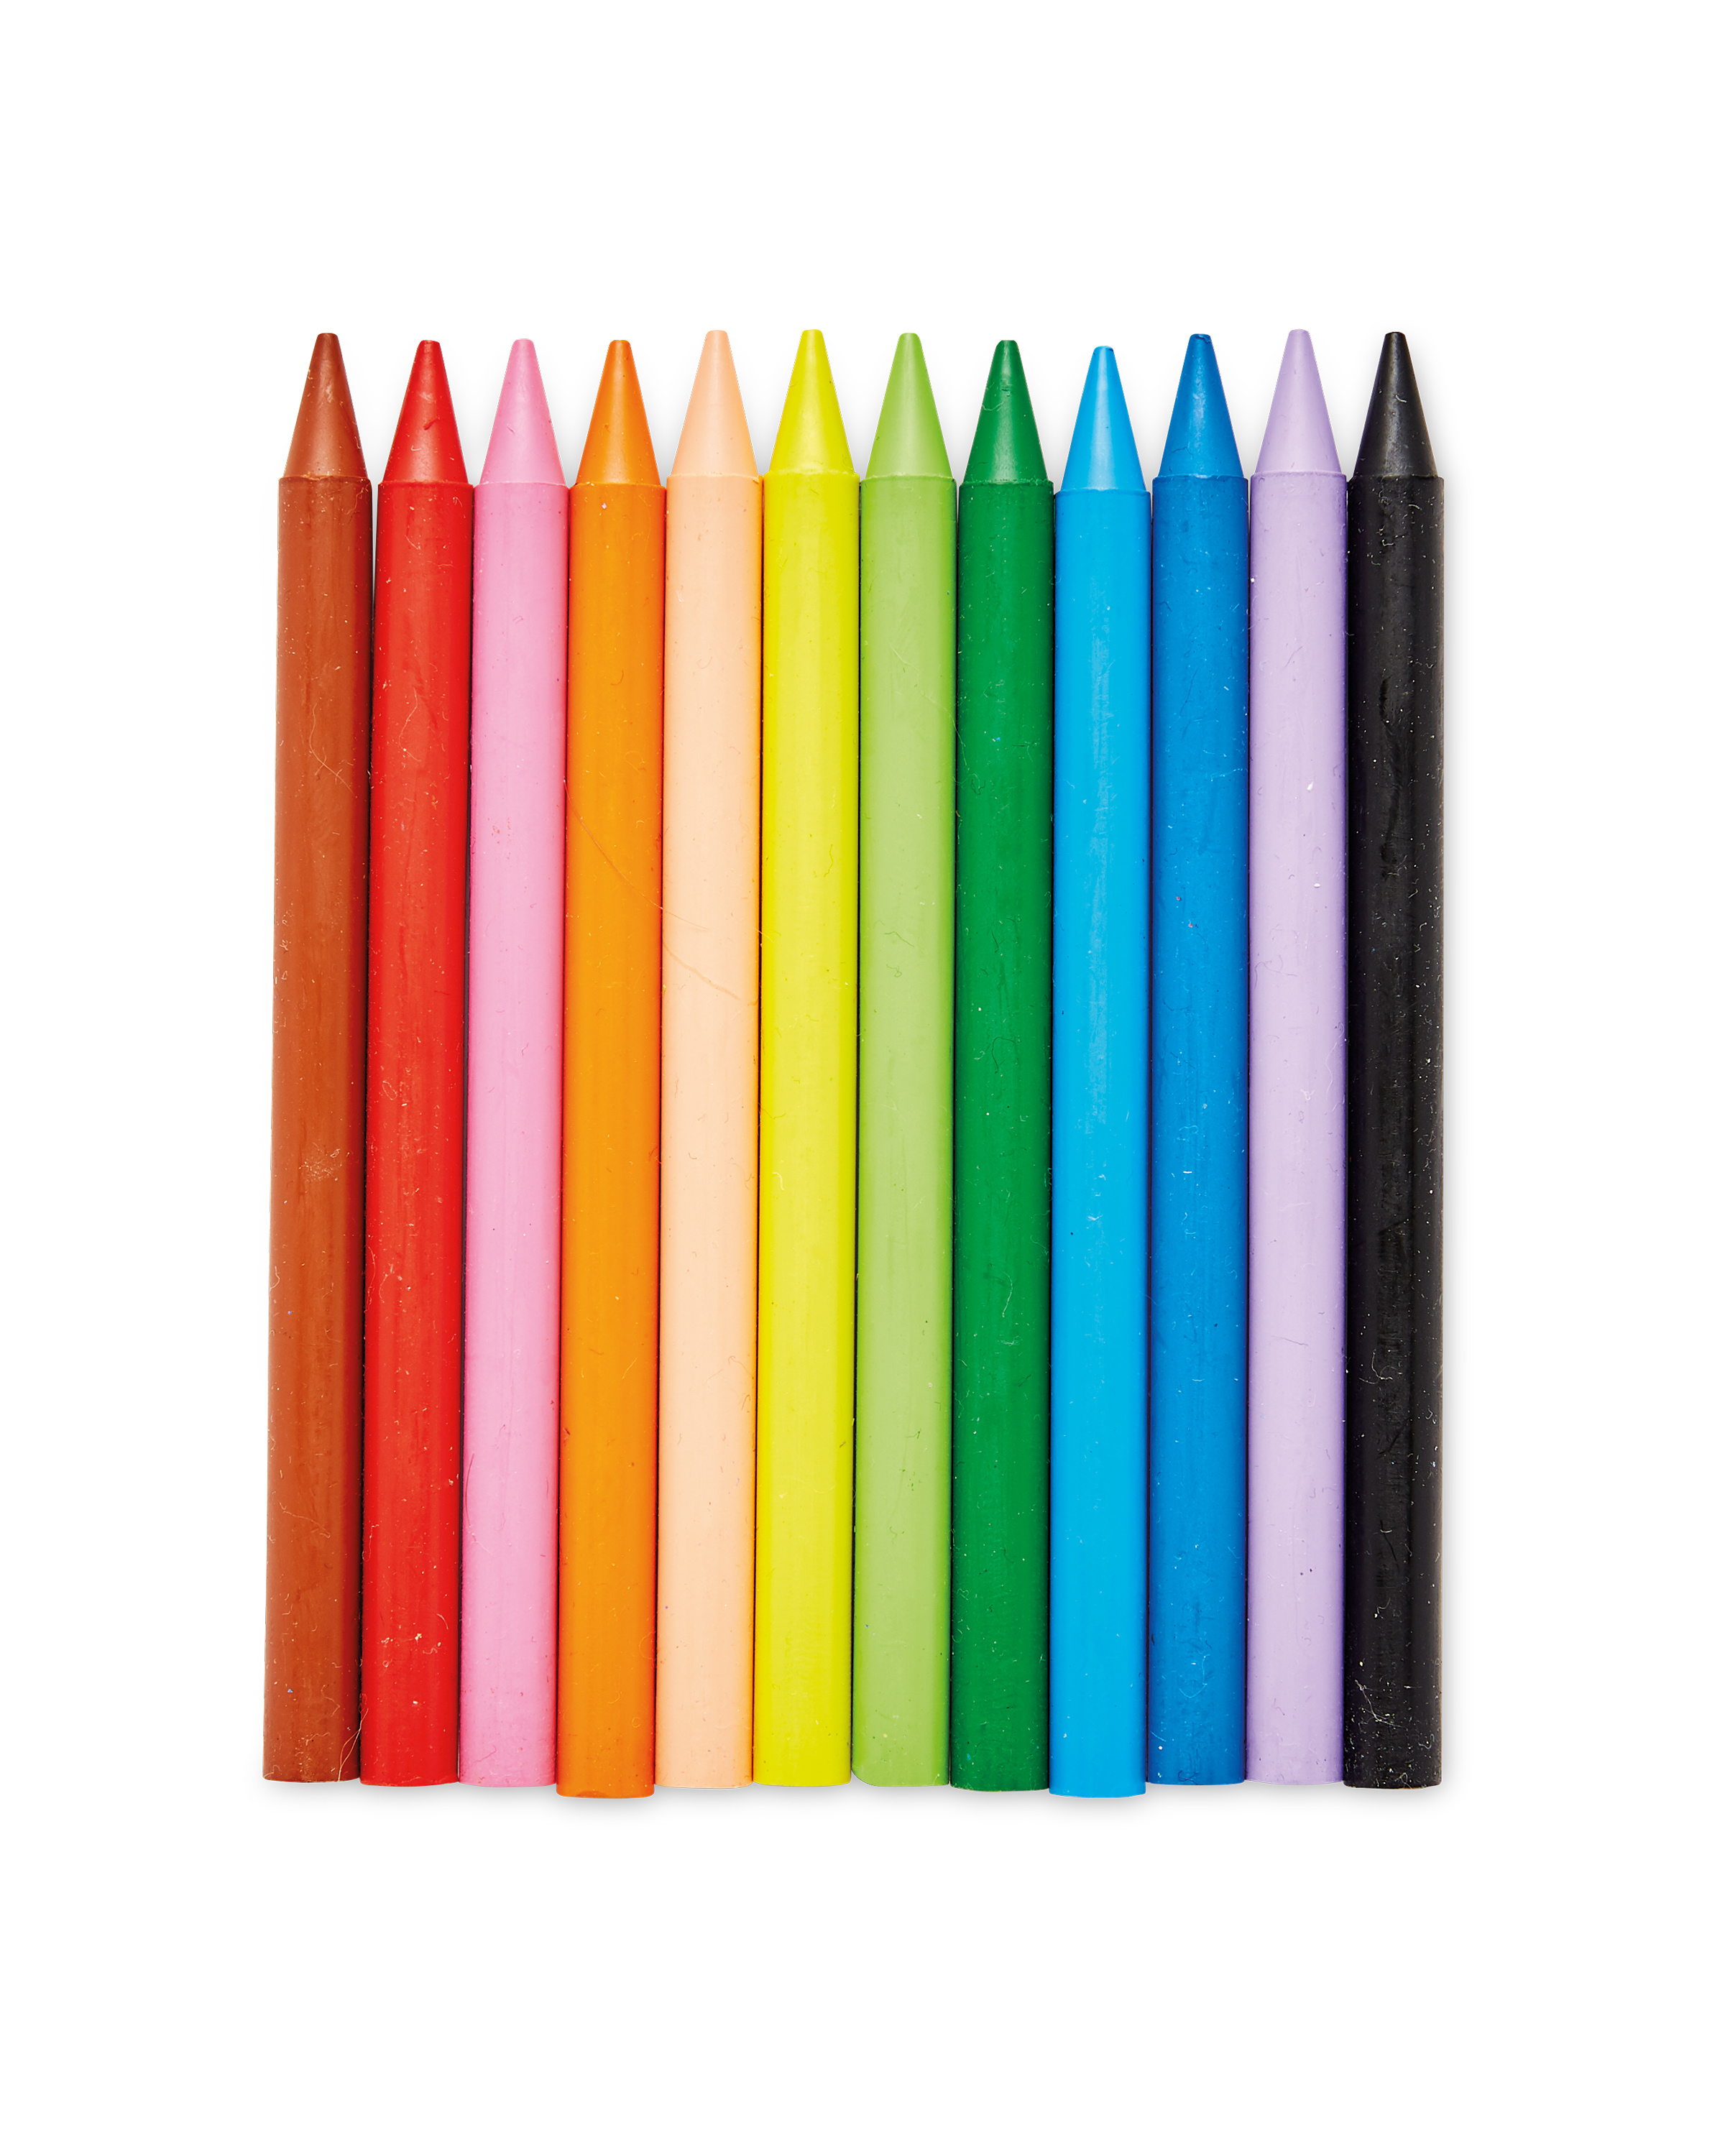 BIC Kids PLASTIDECOR Crayons 12 Colors